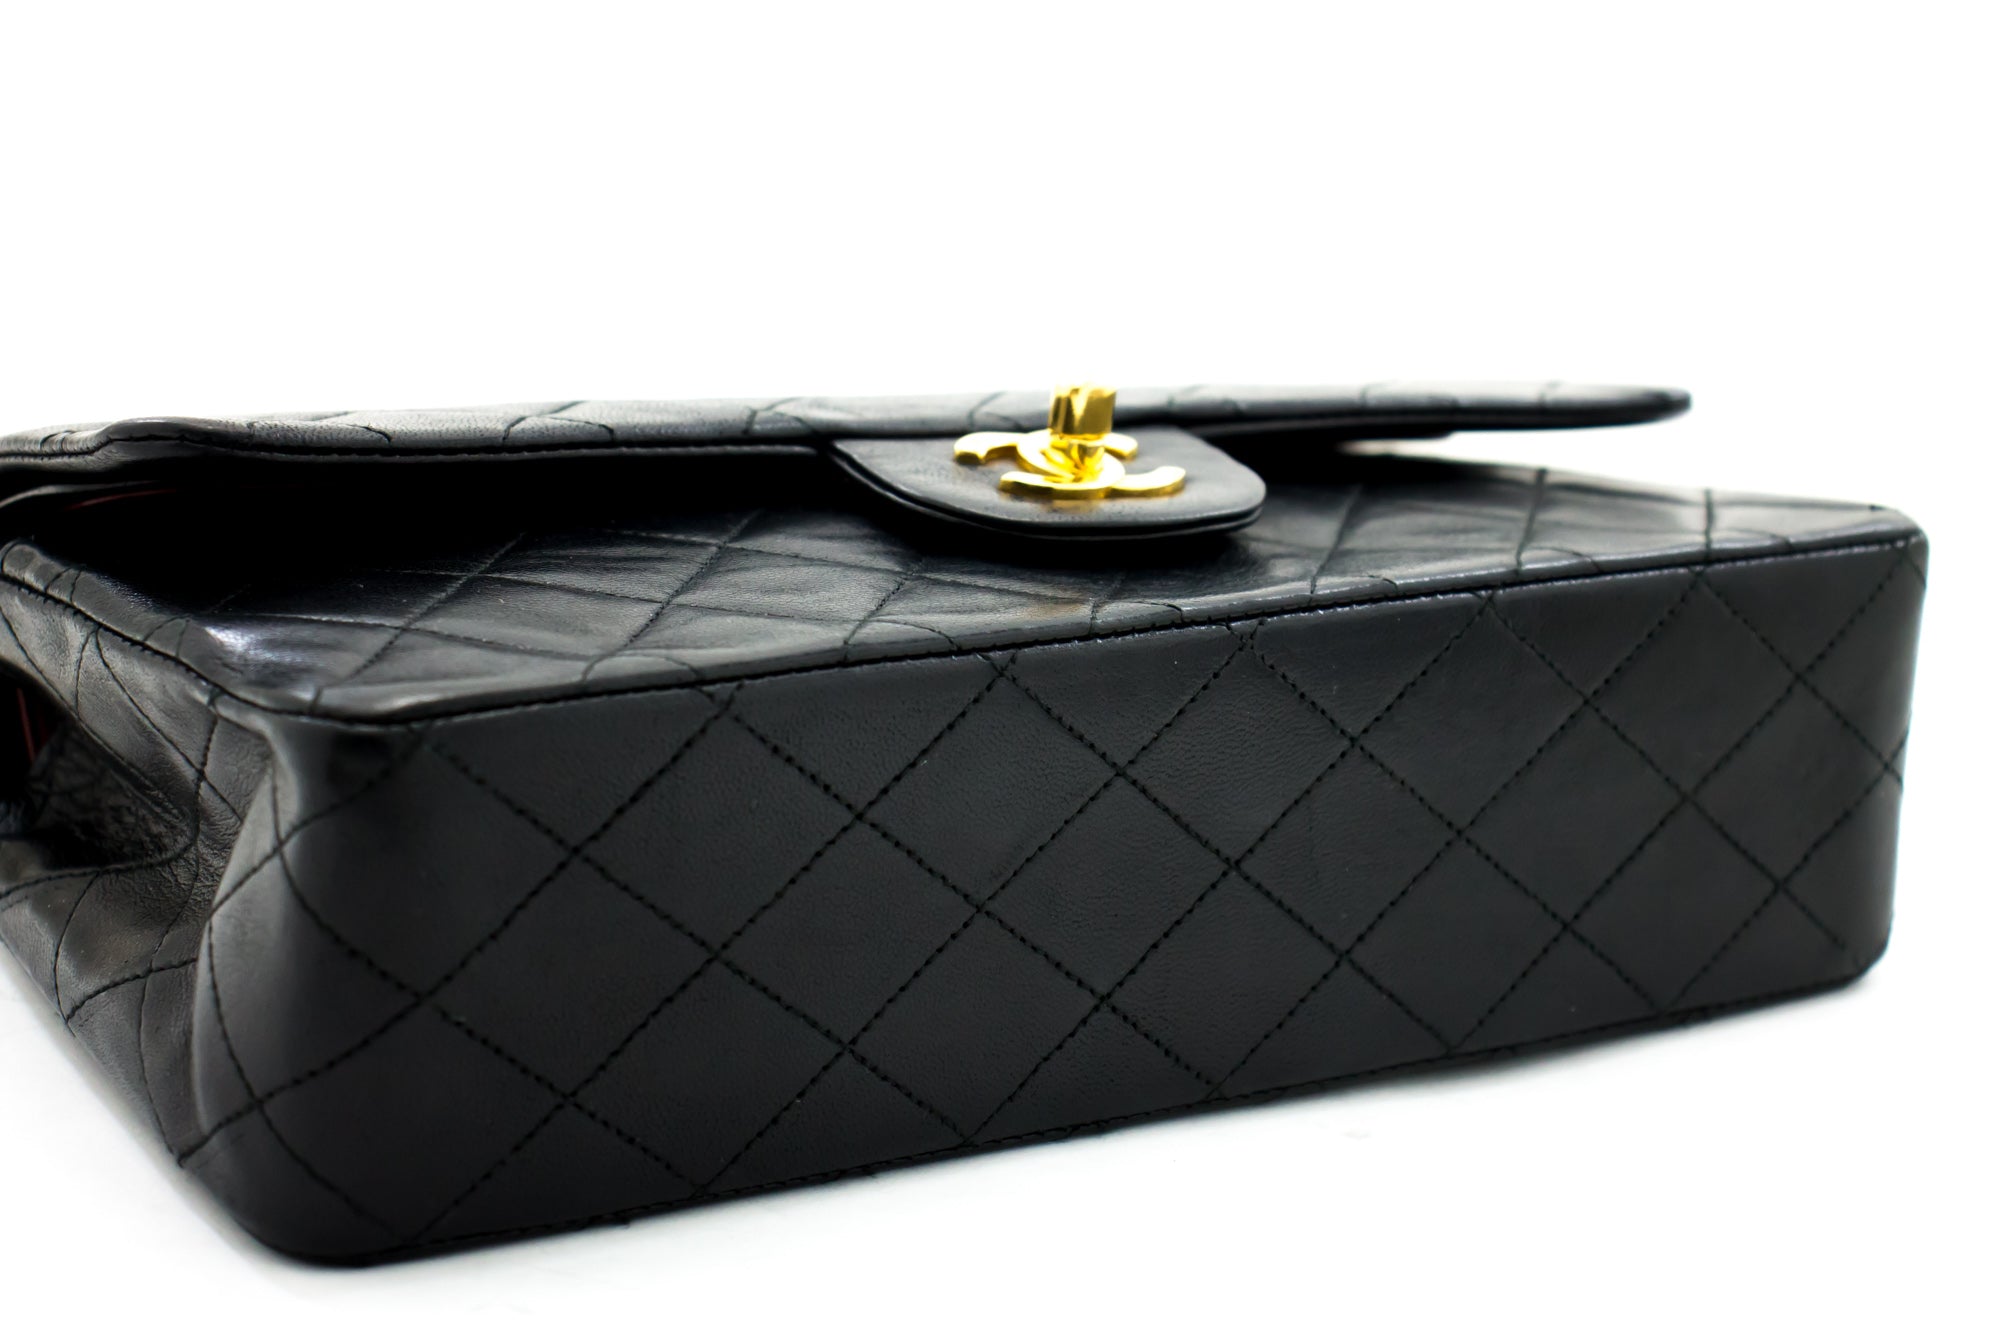 CHANEL 2.55 Double Flap 10 Chain Shoulder Bag Black Lambskin i45 –  hannari-shop